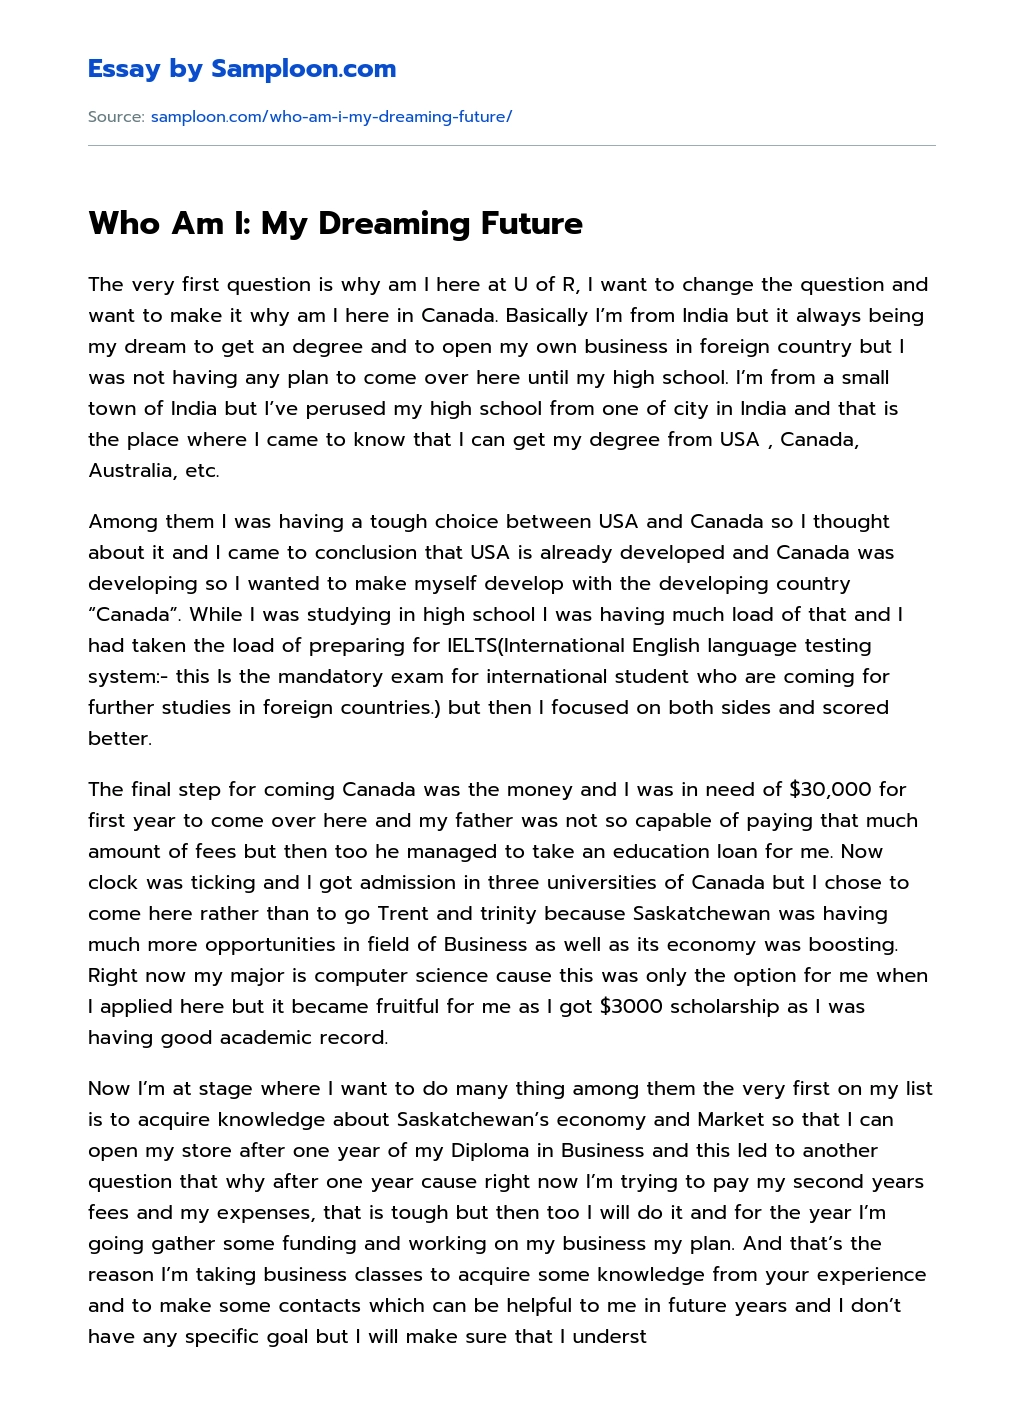 Who Am I: My Dreaming Future essay